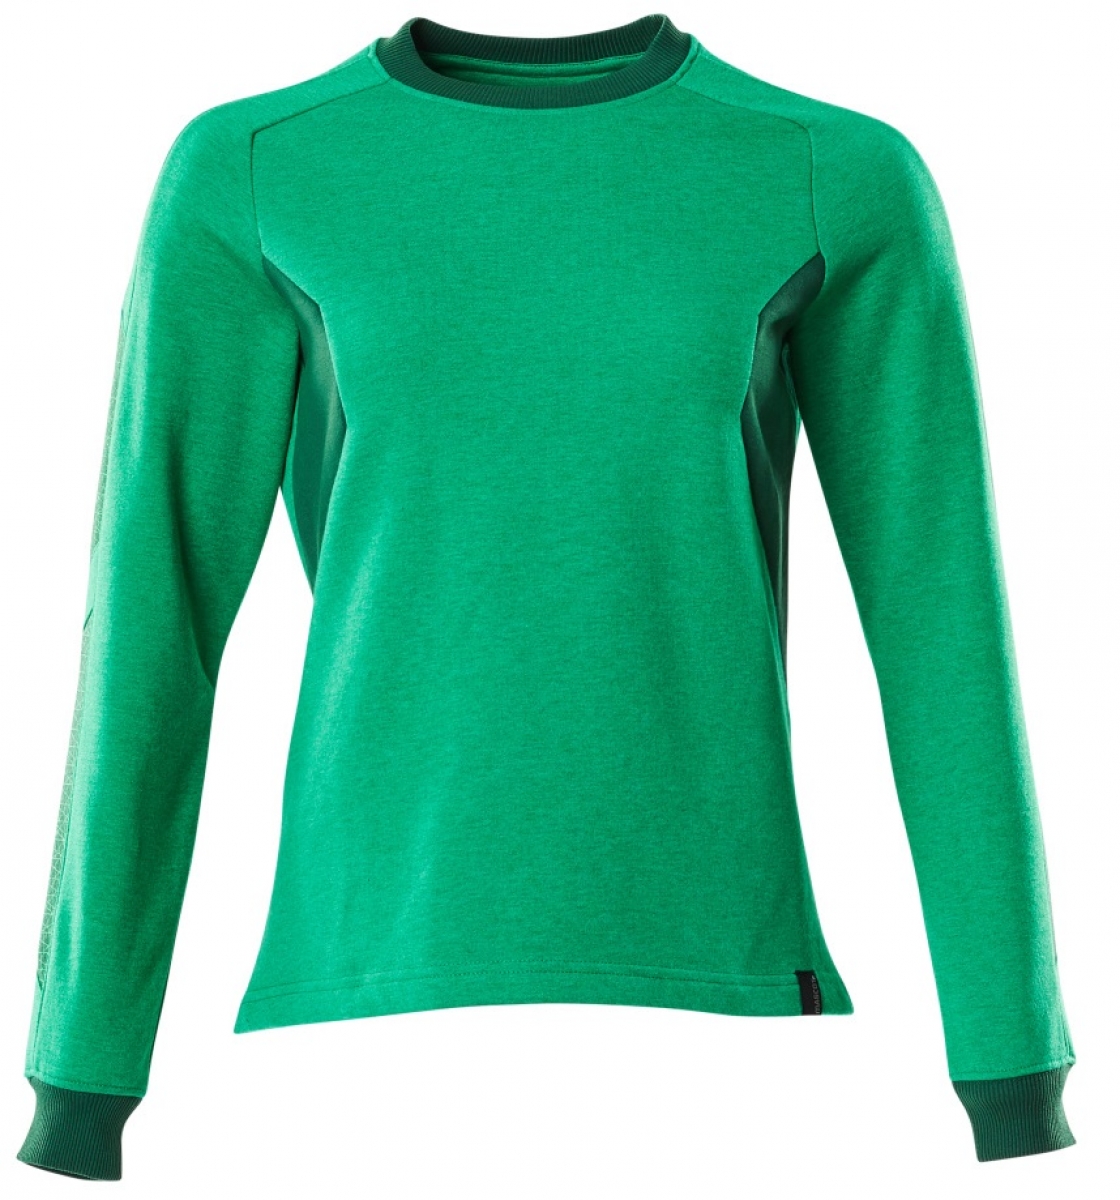 MASCOT-Worker-Shirts, Damen-Sweatshirt, 310 g/m, grasgrn/grn